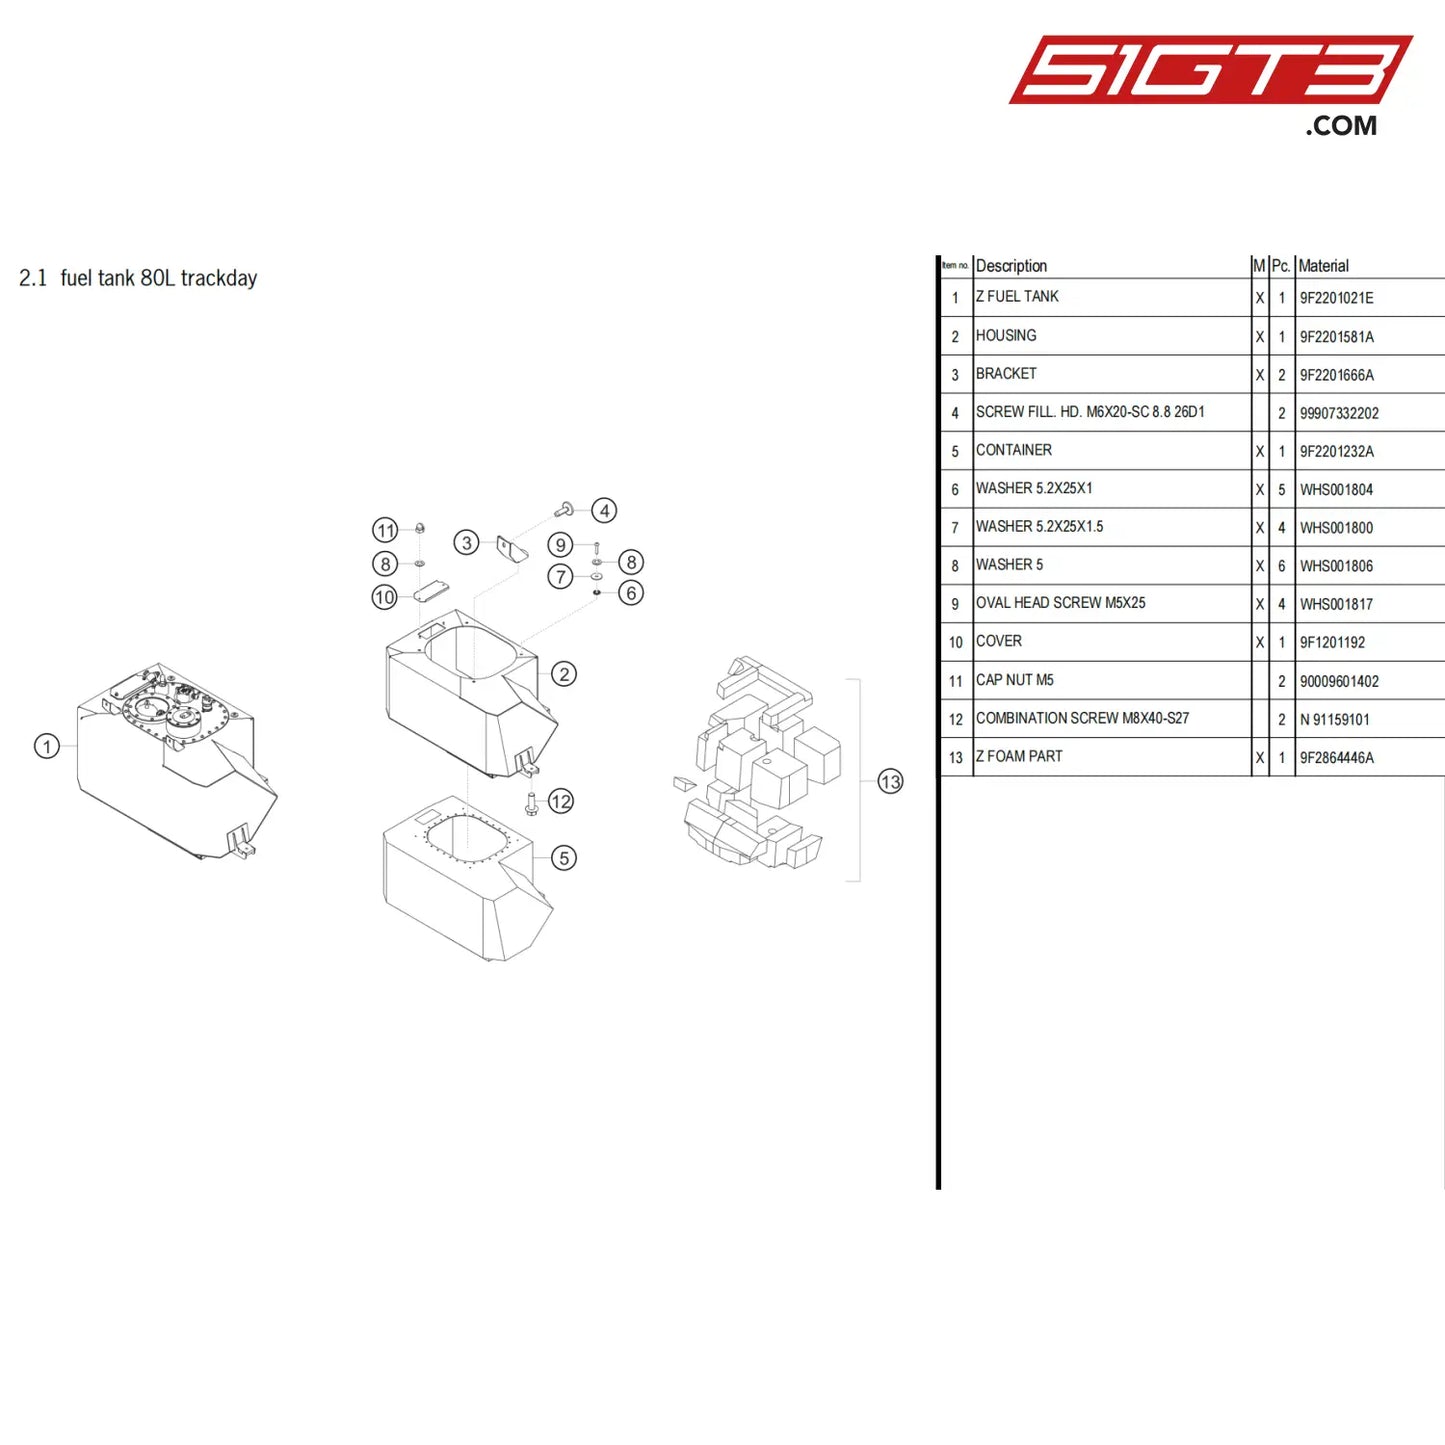 Bracket - 9F2201666A [Porsche 718 Cayman Gt4 Clubsport] Fuel Tank 80L Trackday